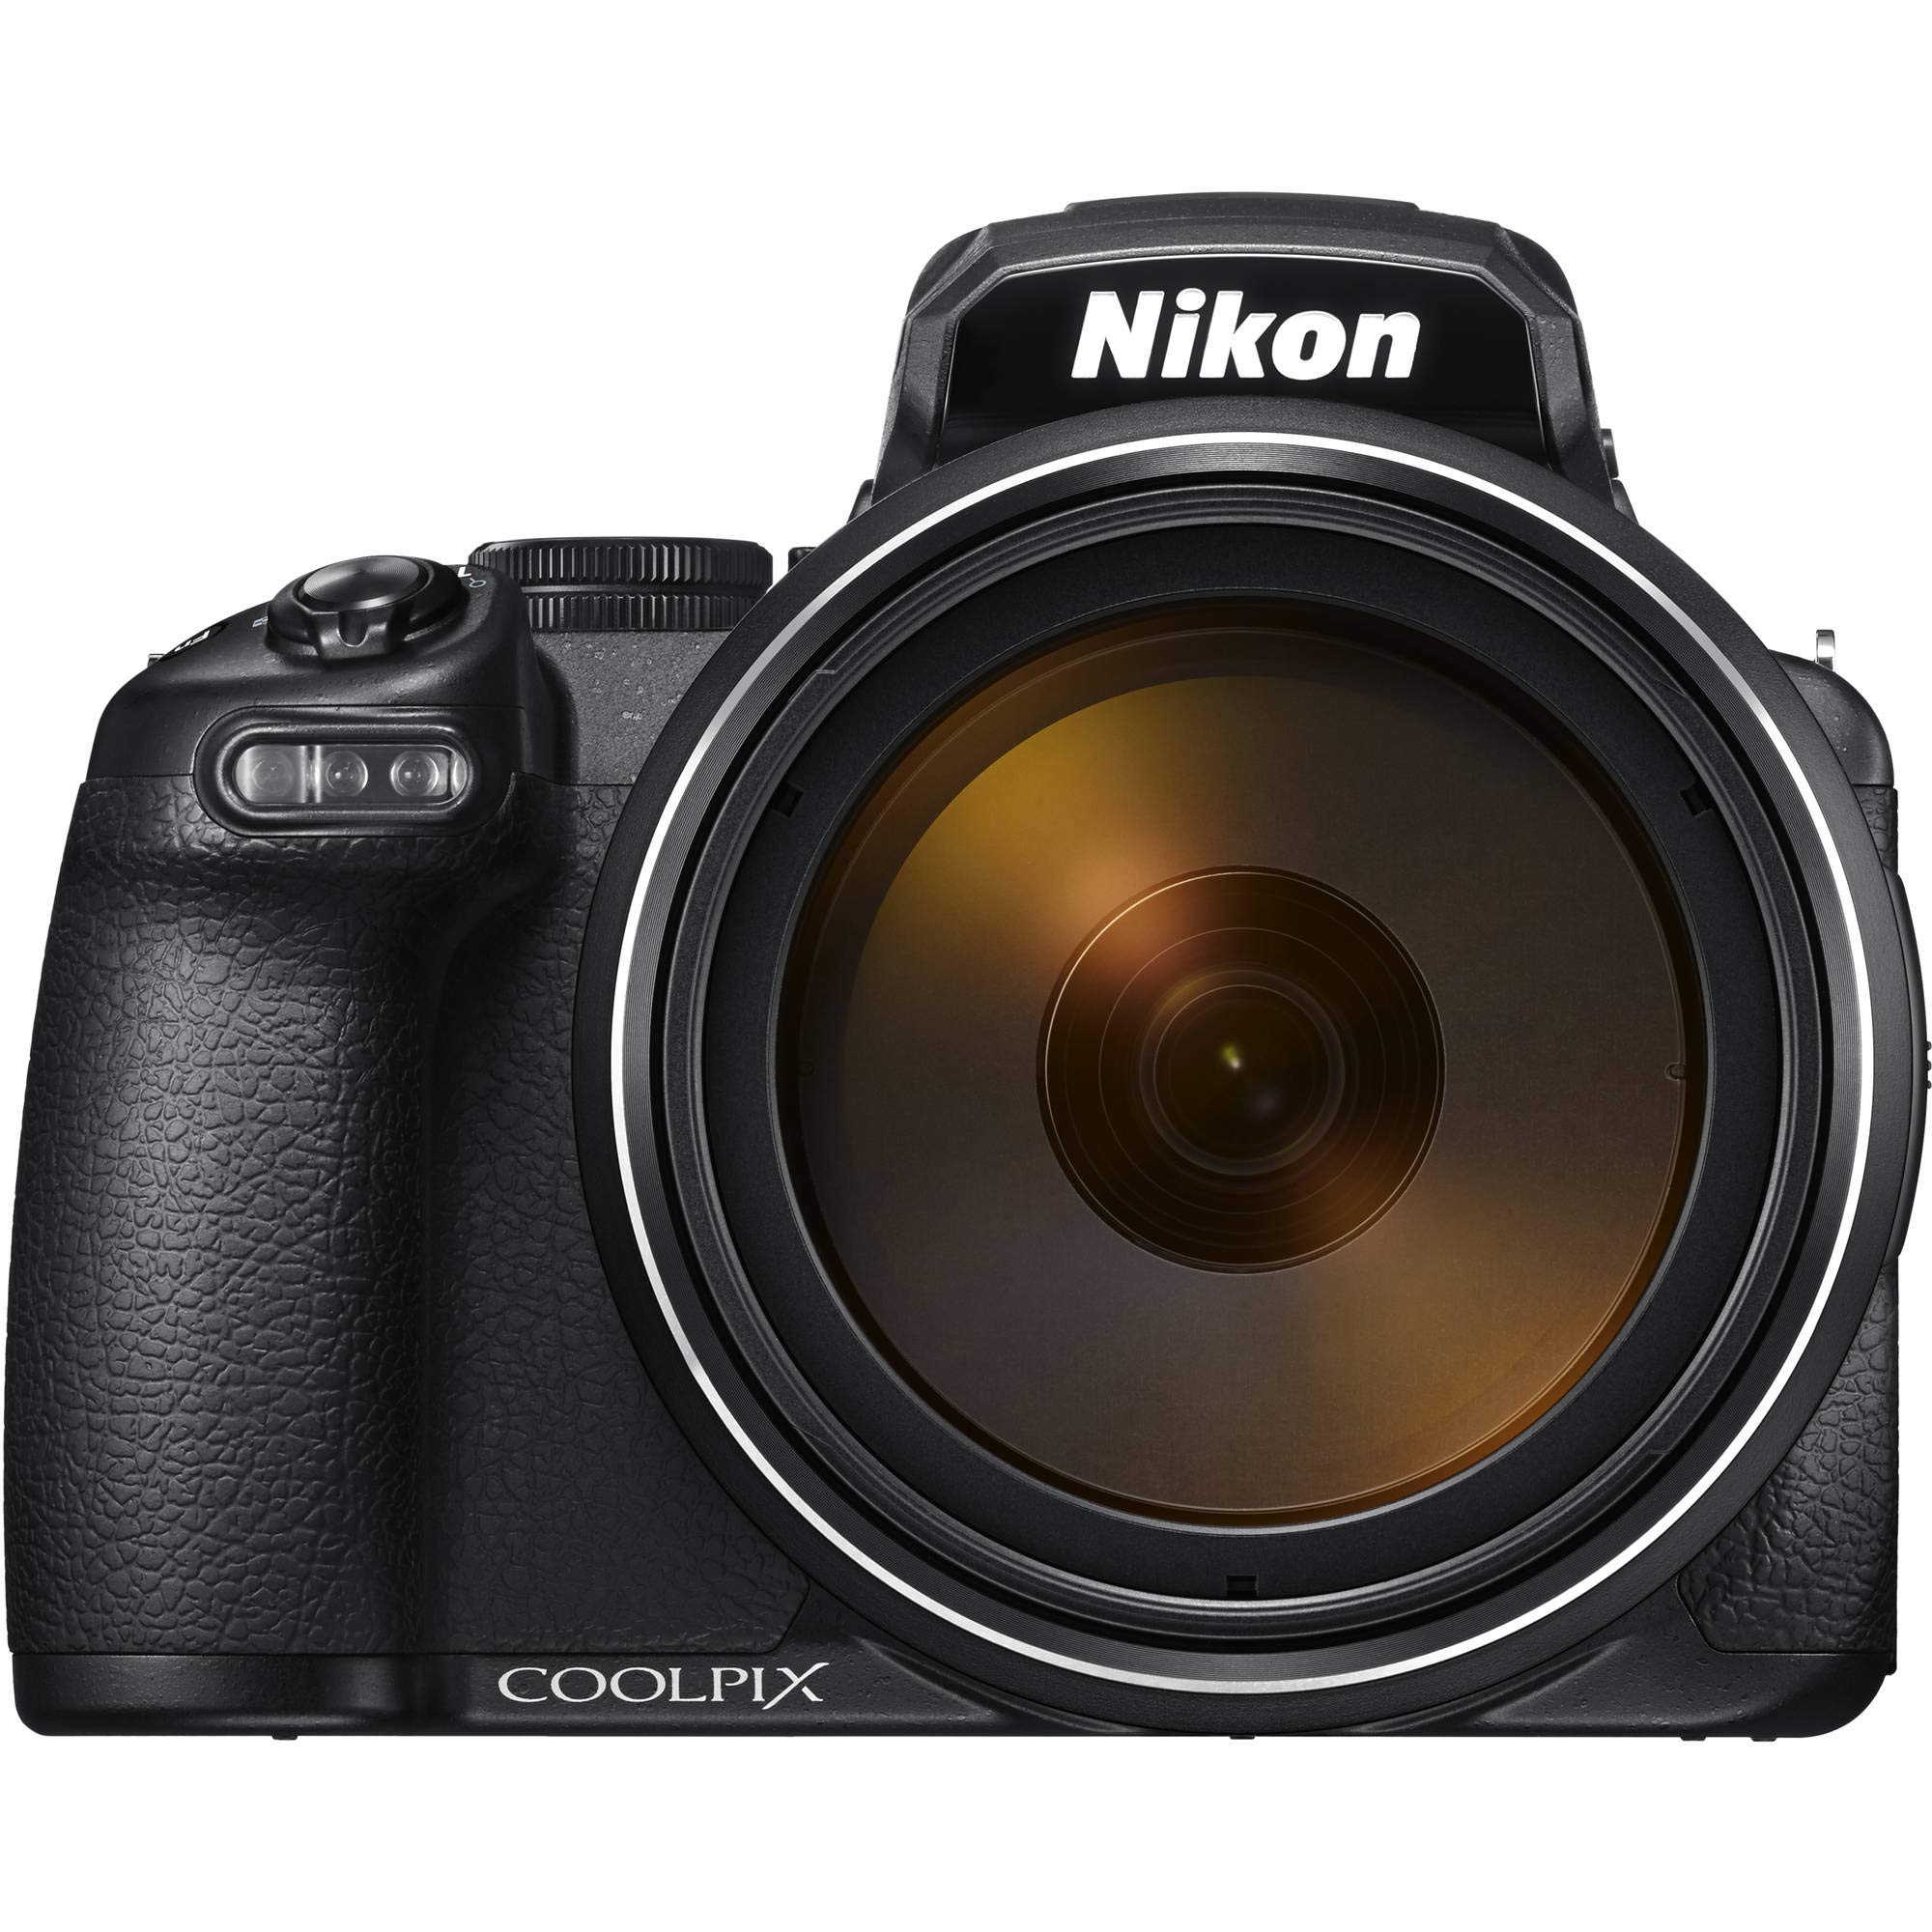 Nikon COOLPIX P1000 Digital Camera + 64GB Sandisk Extreme Memory Card Professional Bundle International Model